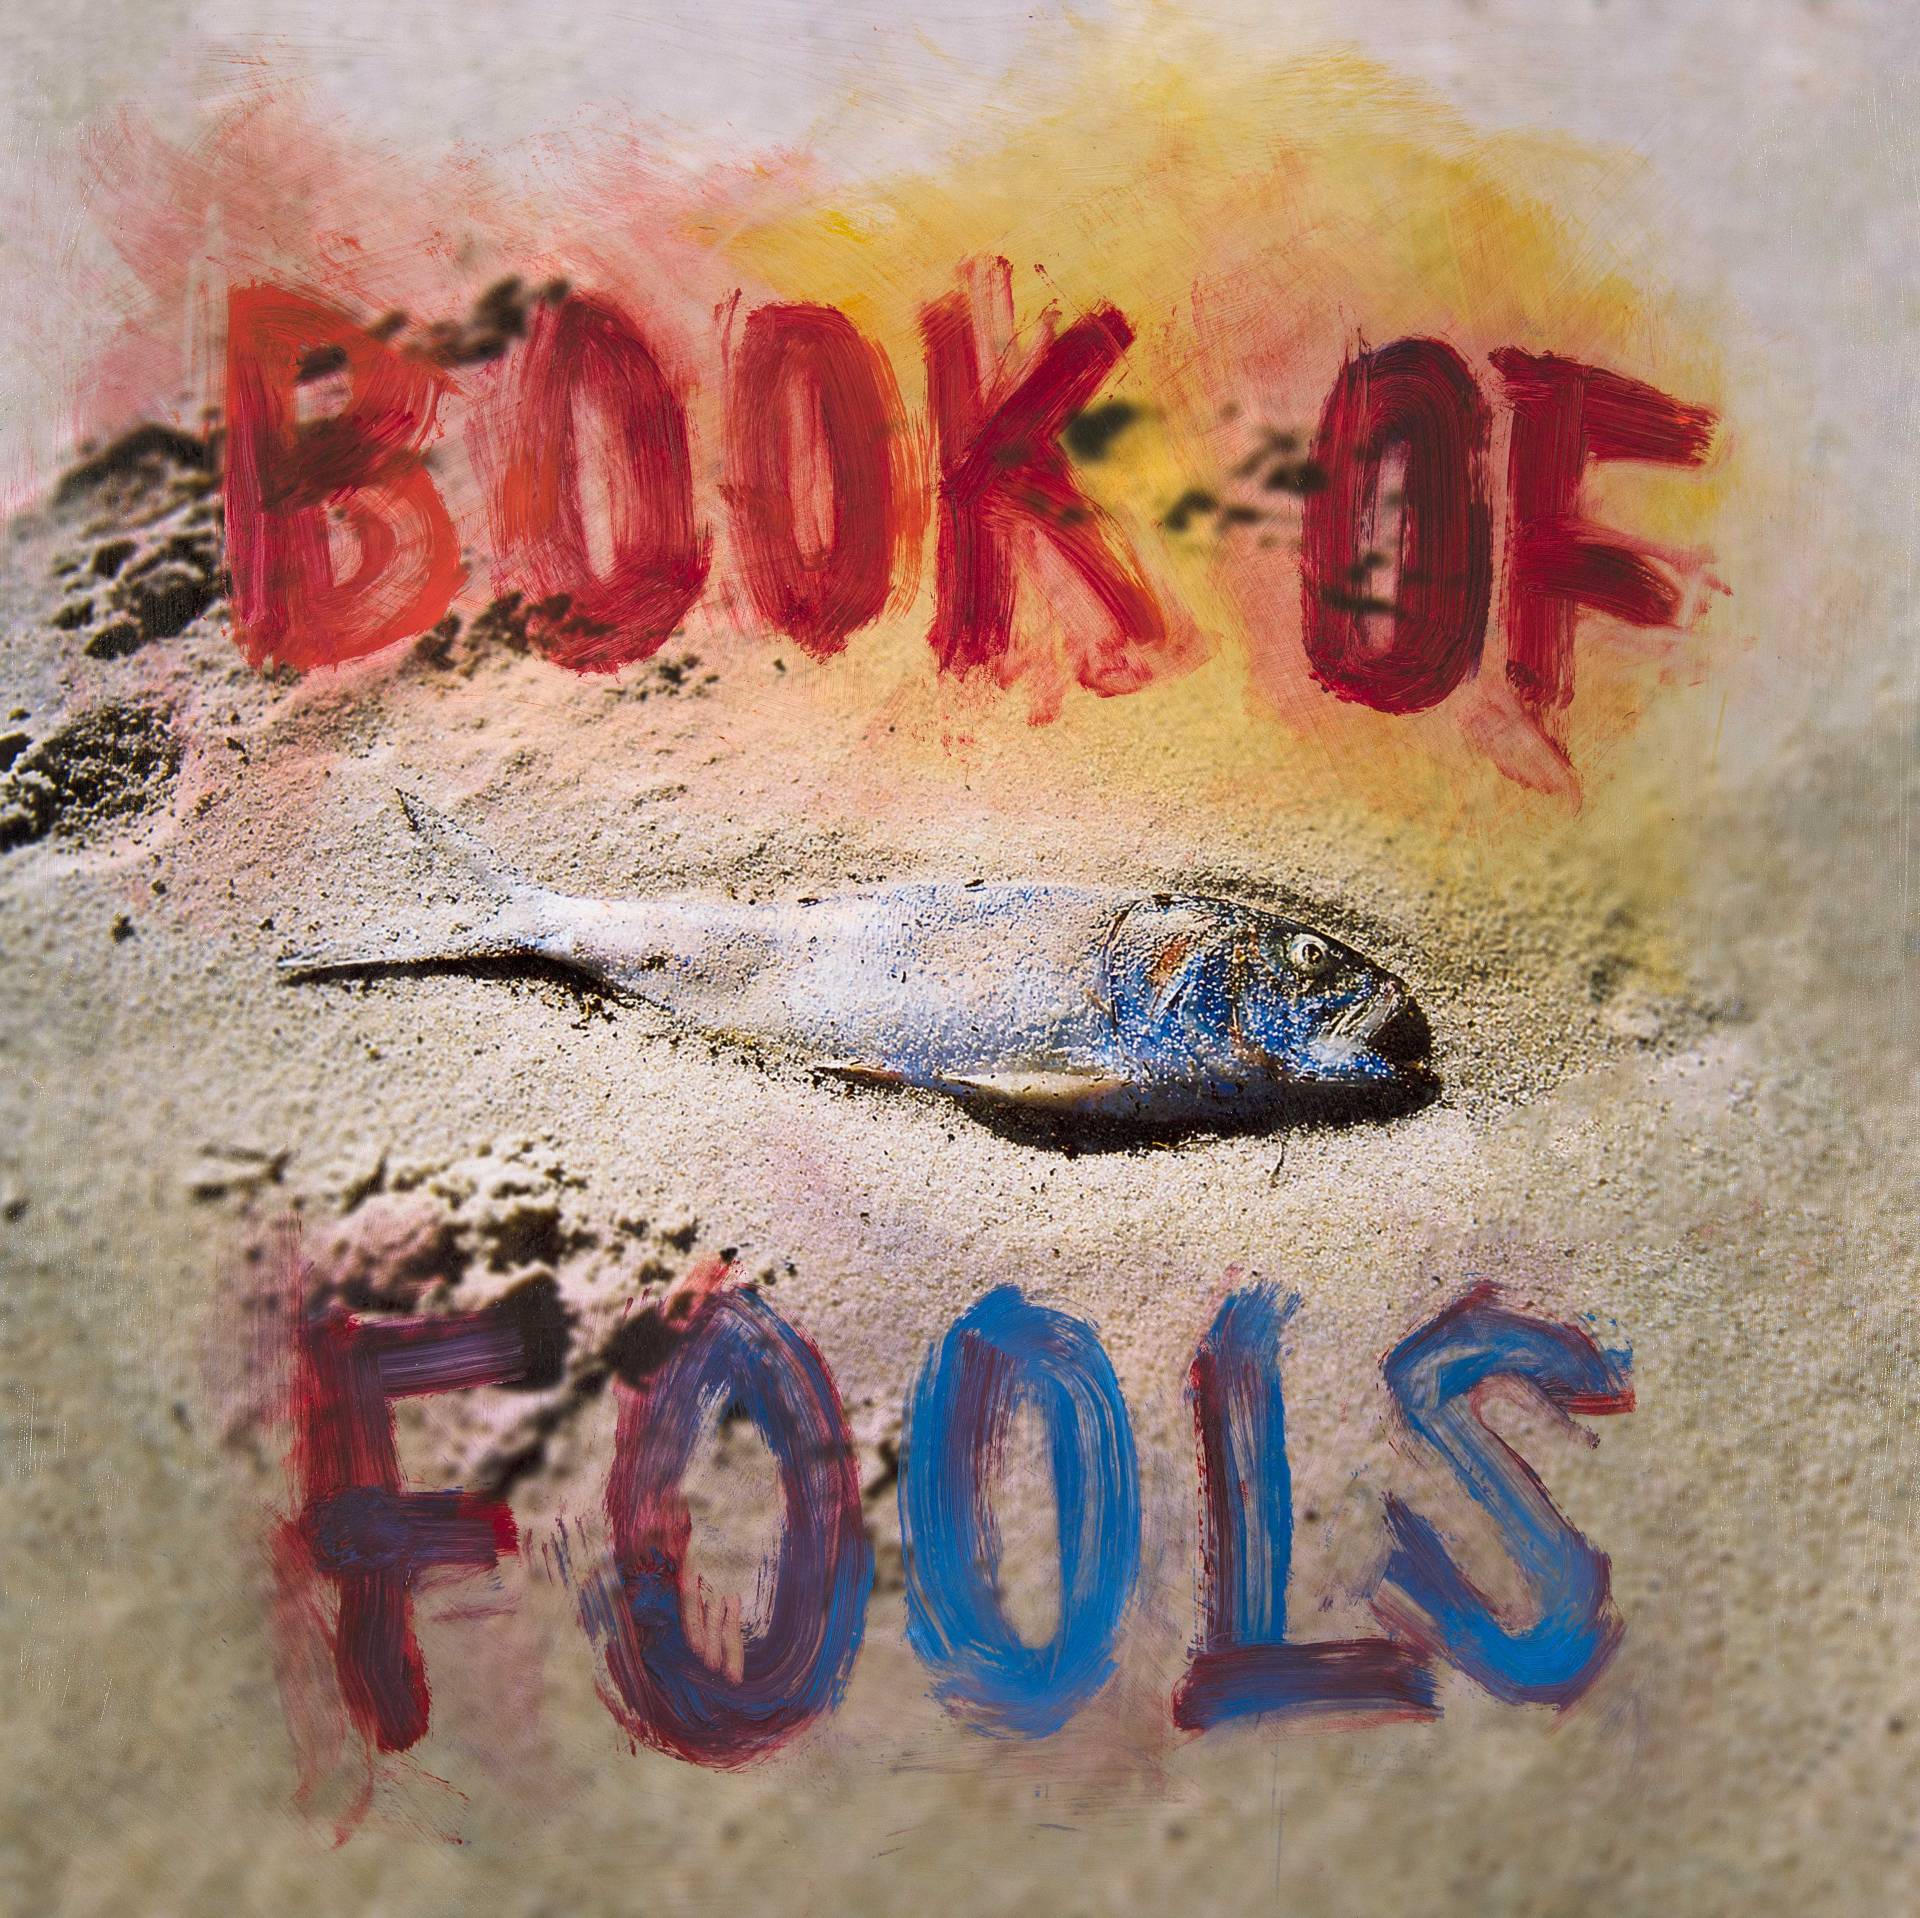 Mipso ‘Book of Fools’ album artwork